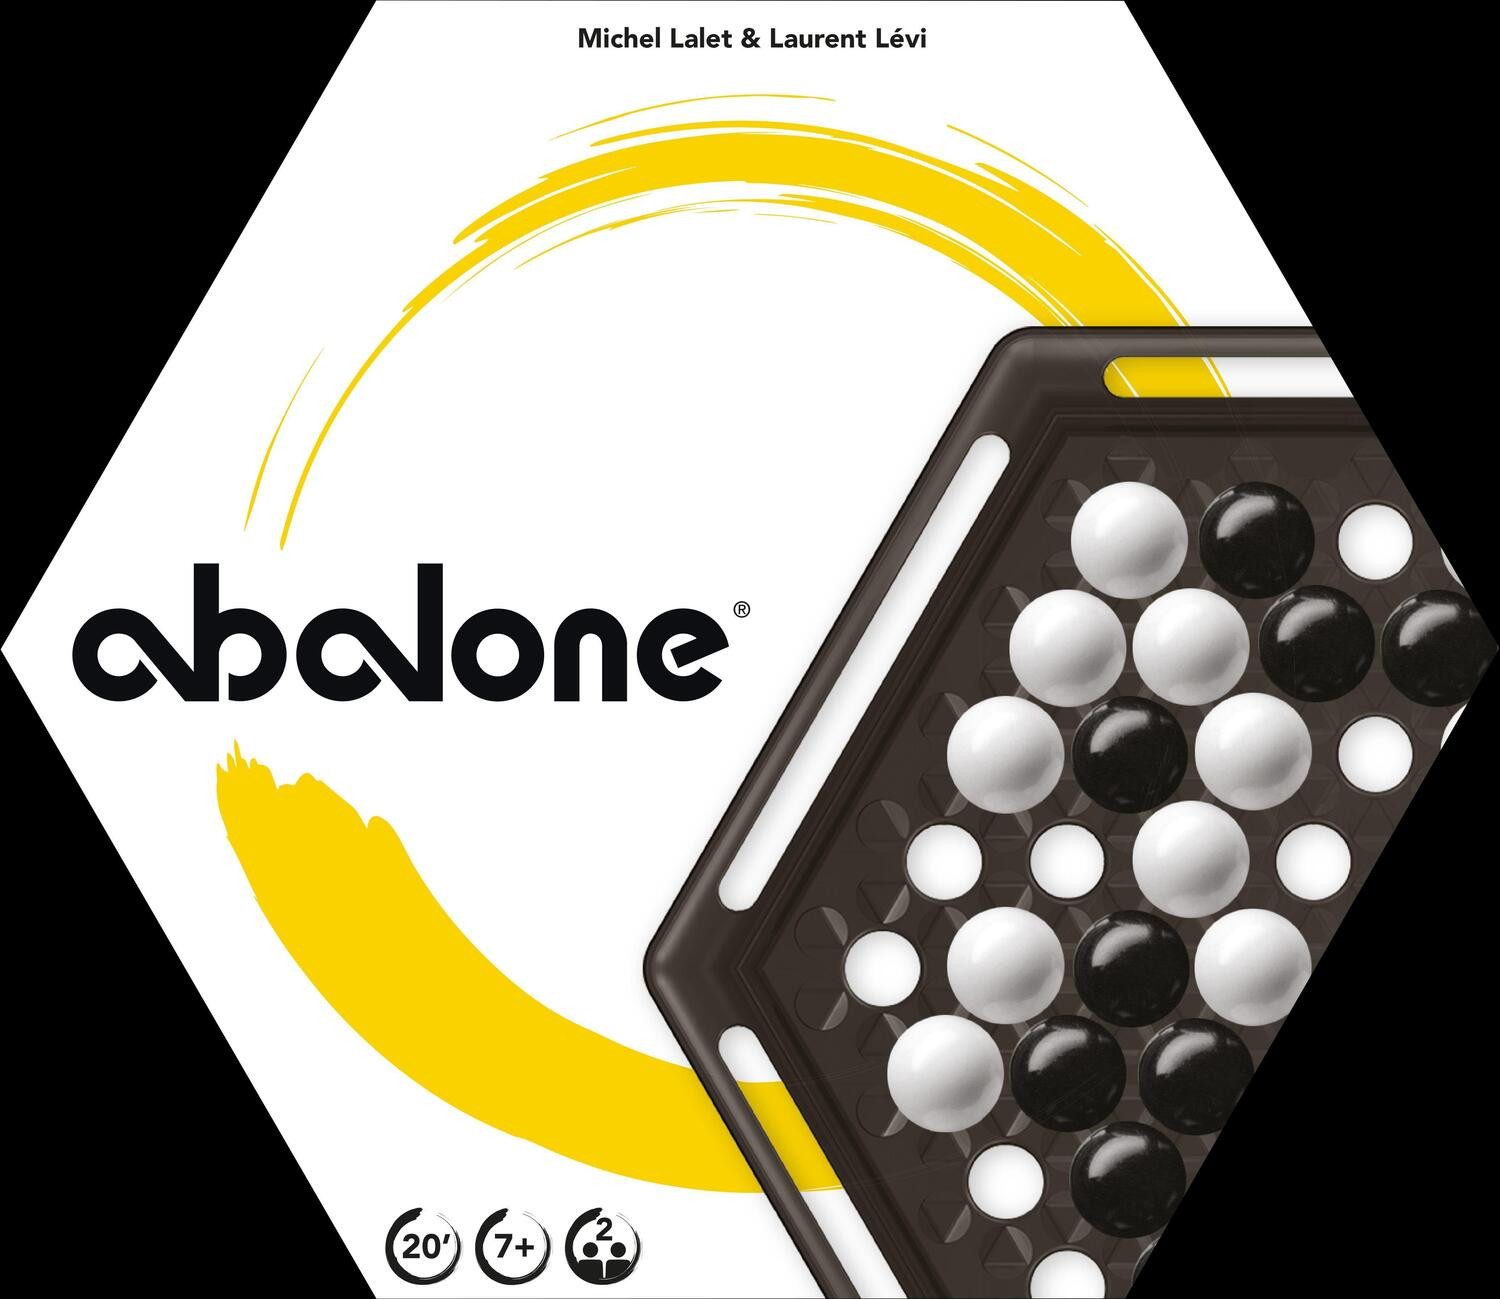 Asmodee Spiel, Abalone. Modernes Design